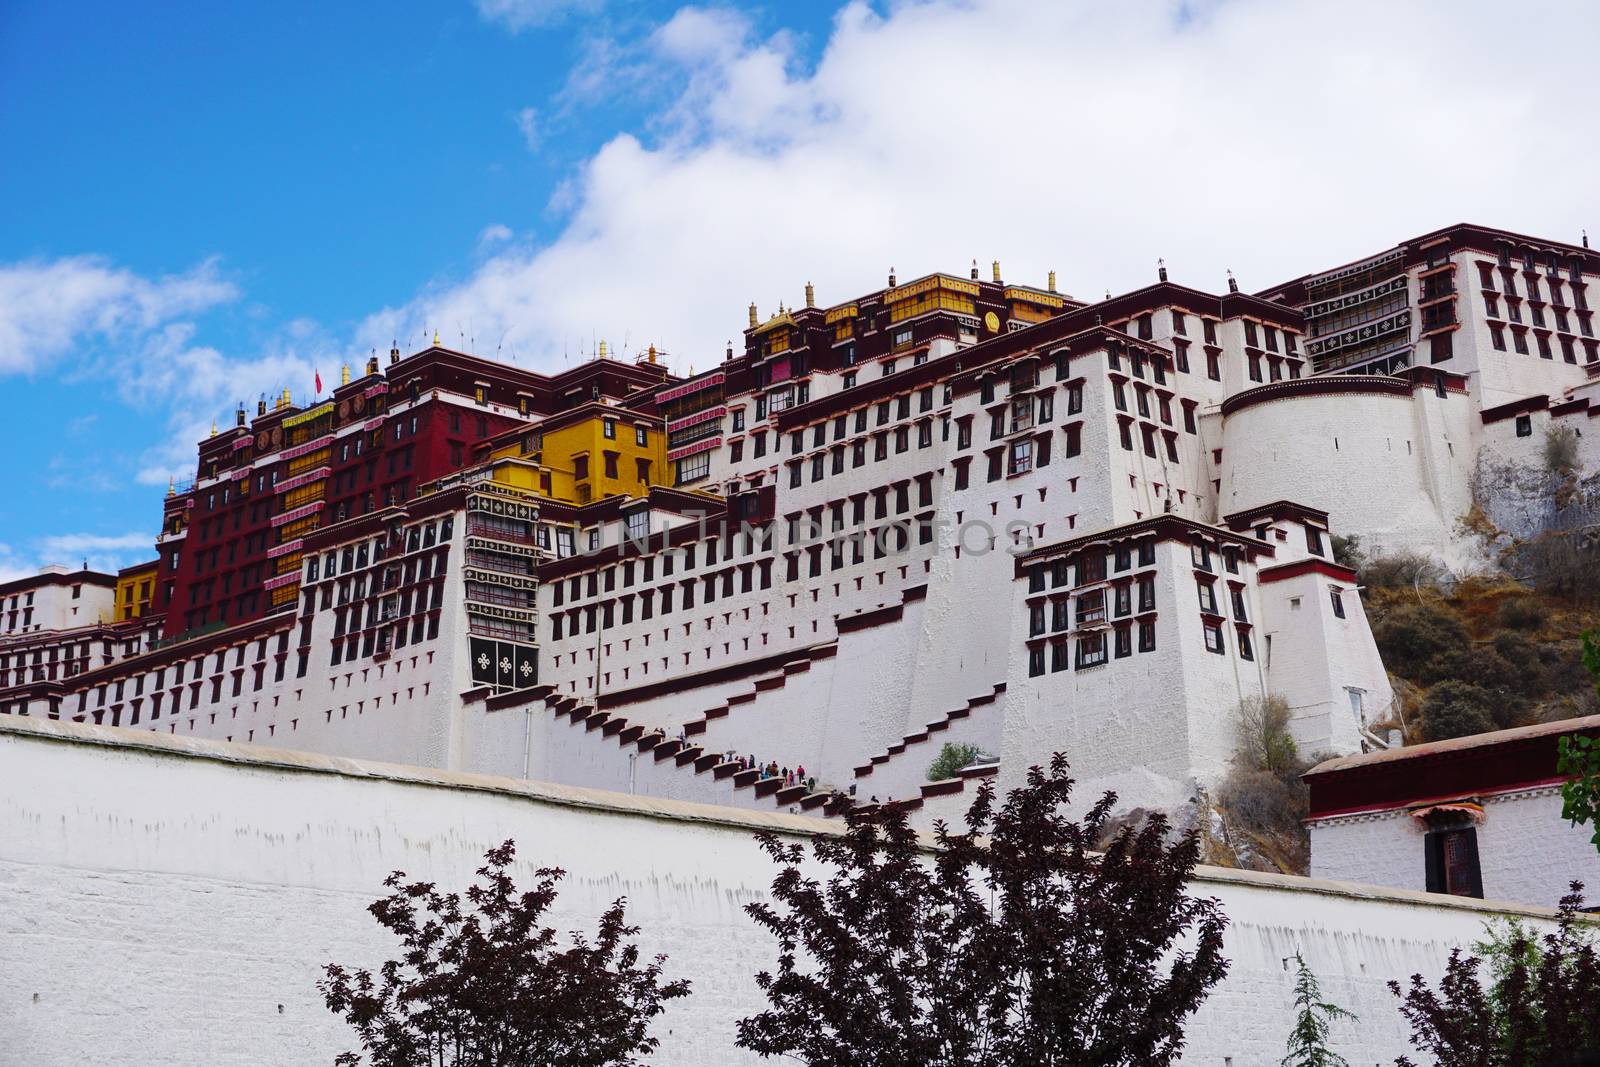 Grand potala palace in Lhasa Tibet China